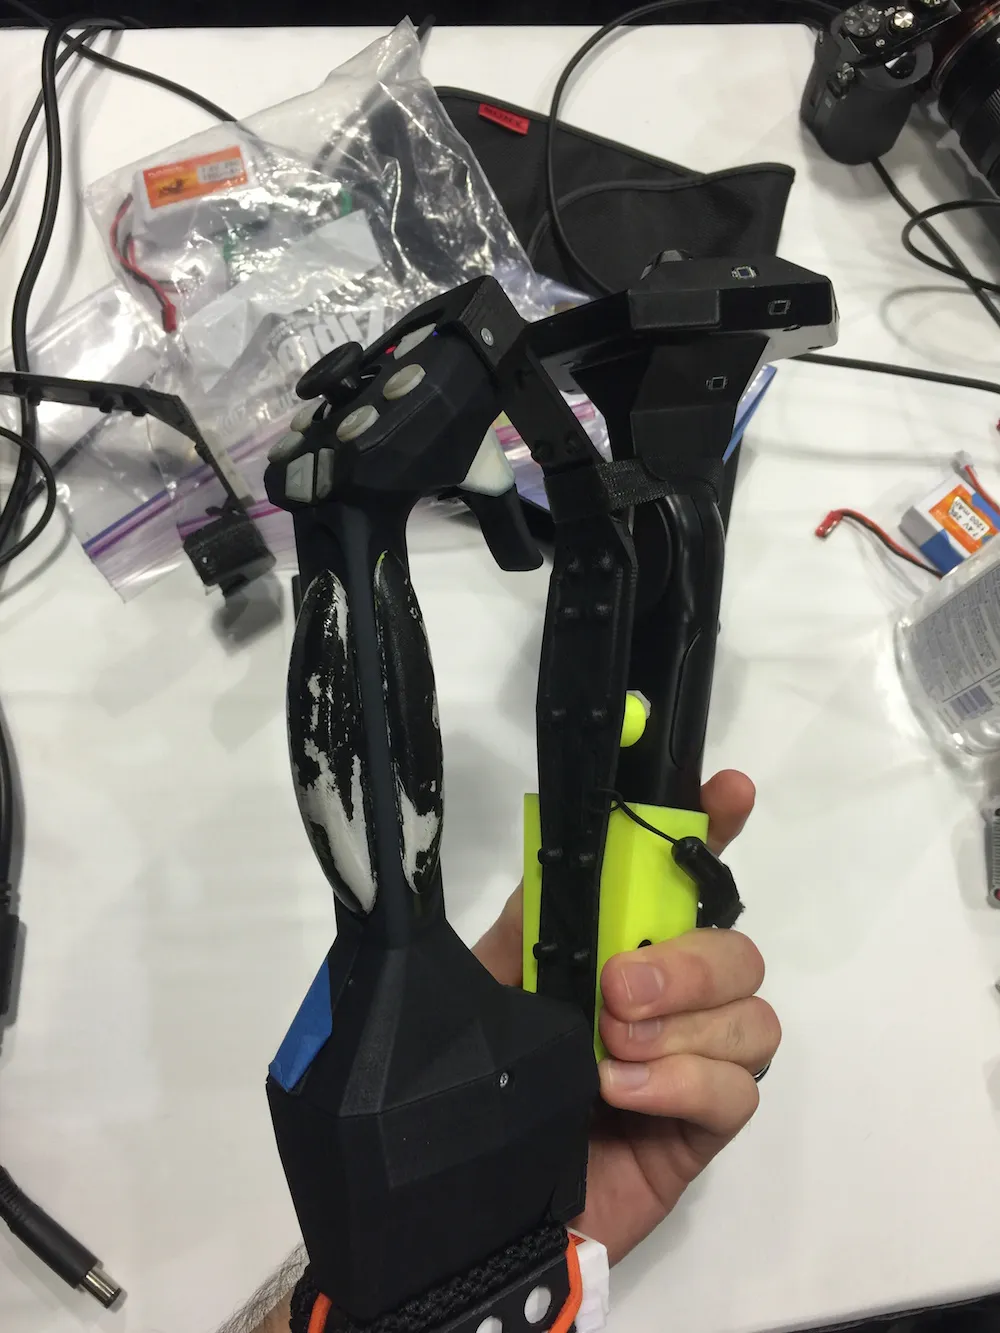 Forget VR Desktops - This Haptic Controller Could Create VR Desks